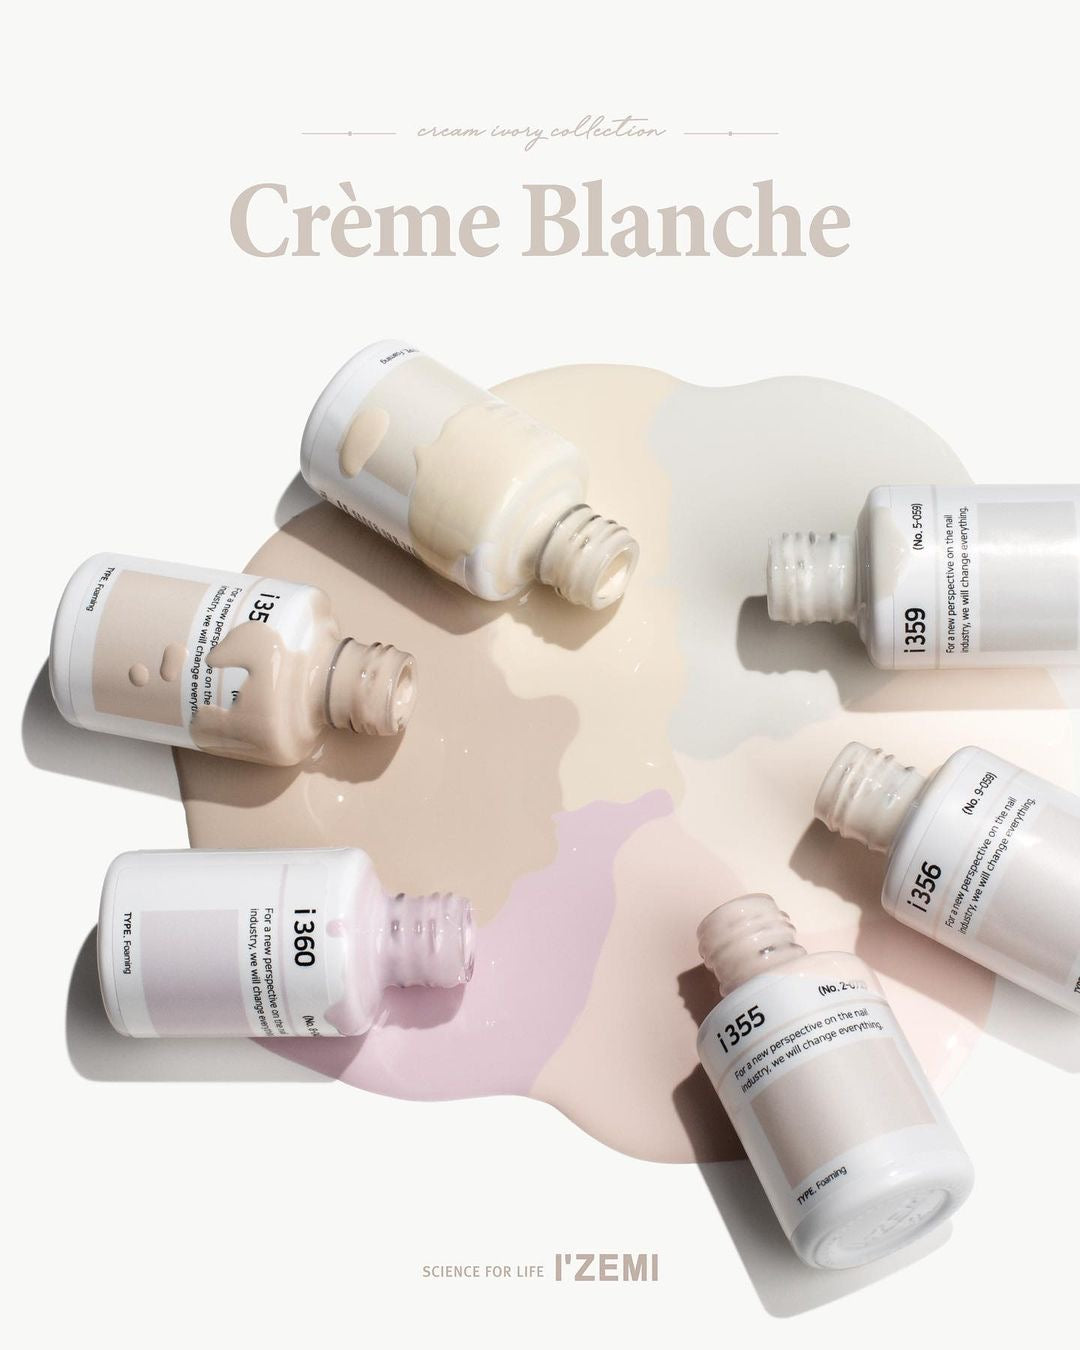 Izemi Creme Blanche collection - individual